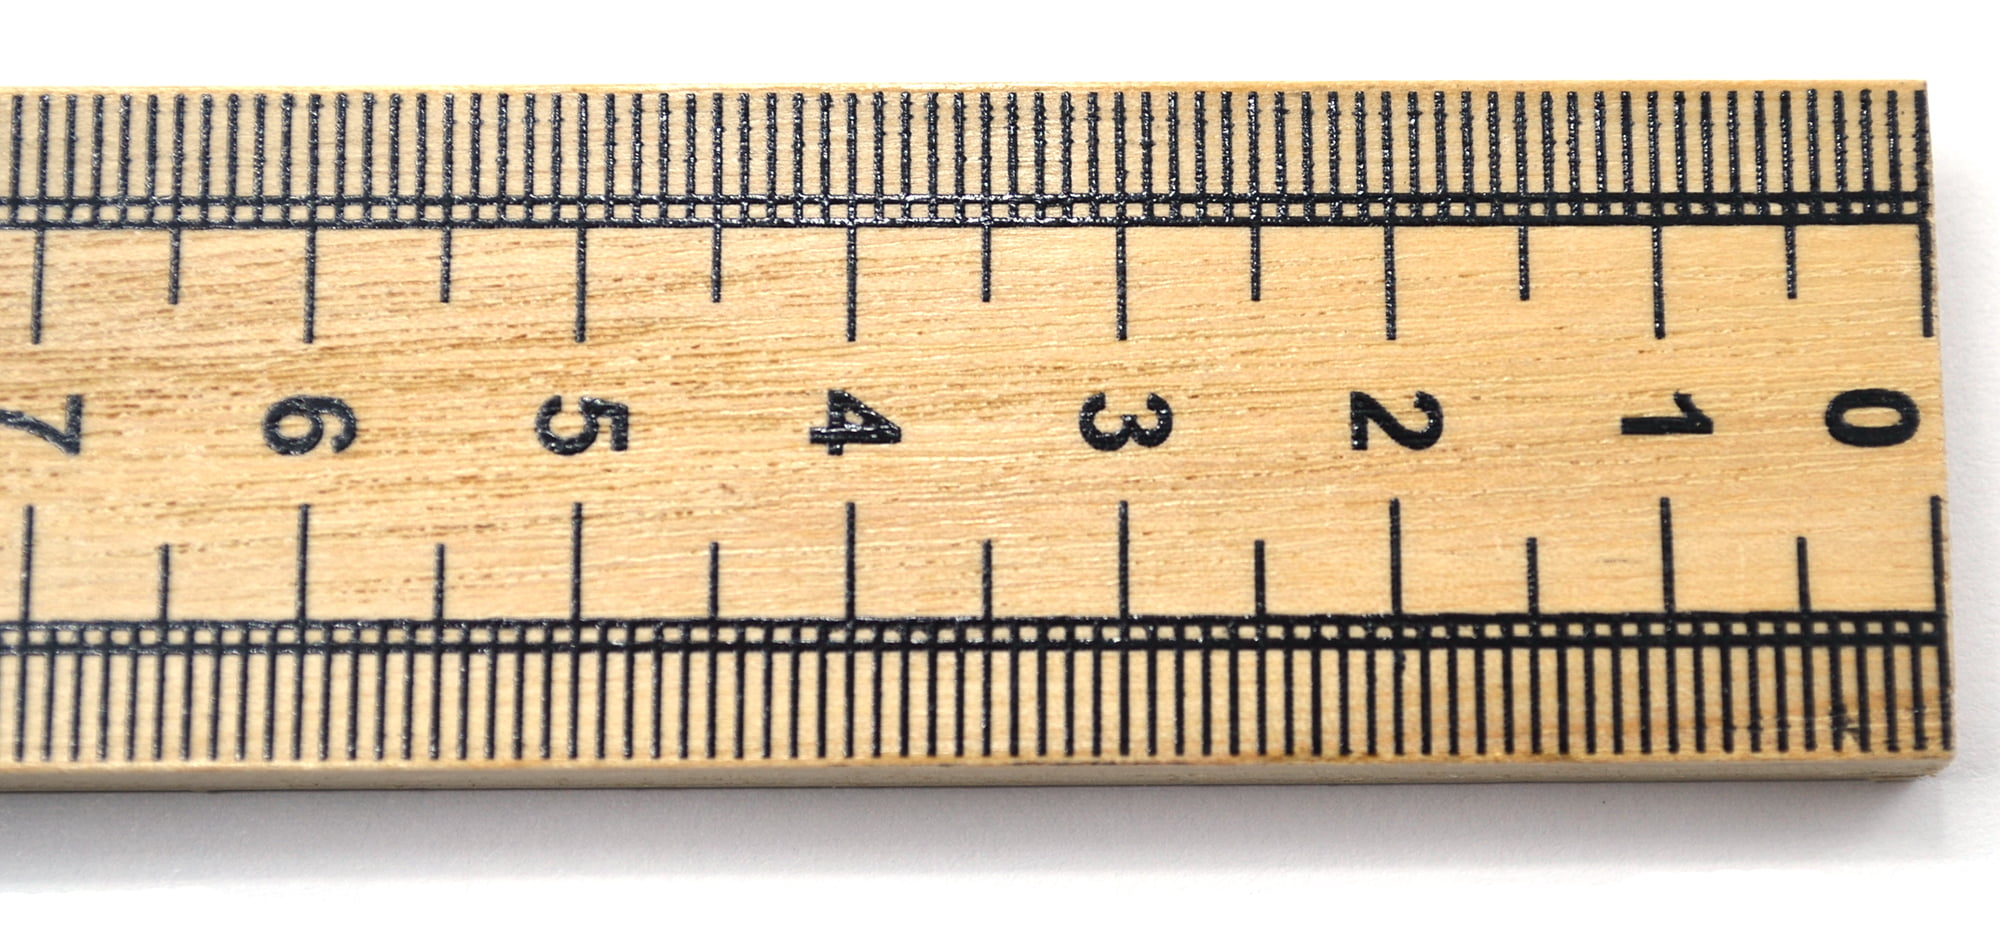 SKU: PU75536923. and millimeters, 50cm Hard Wood Half Meter Stick, Graduate...